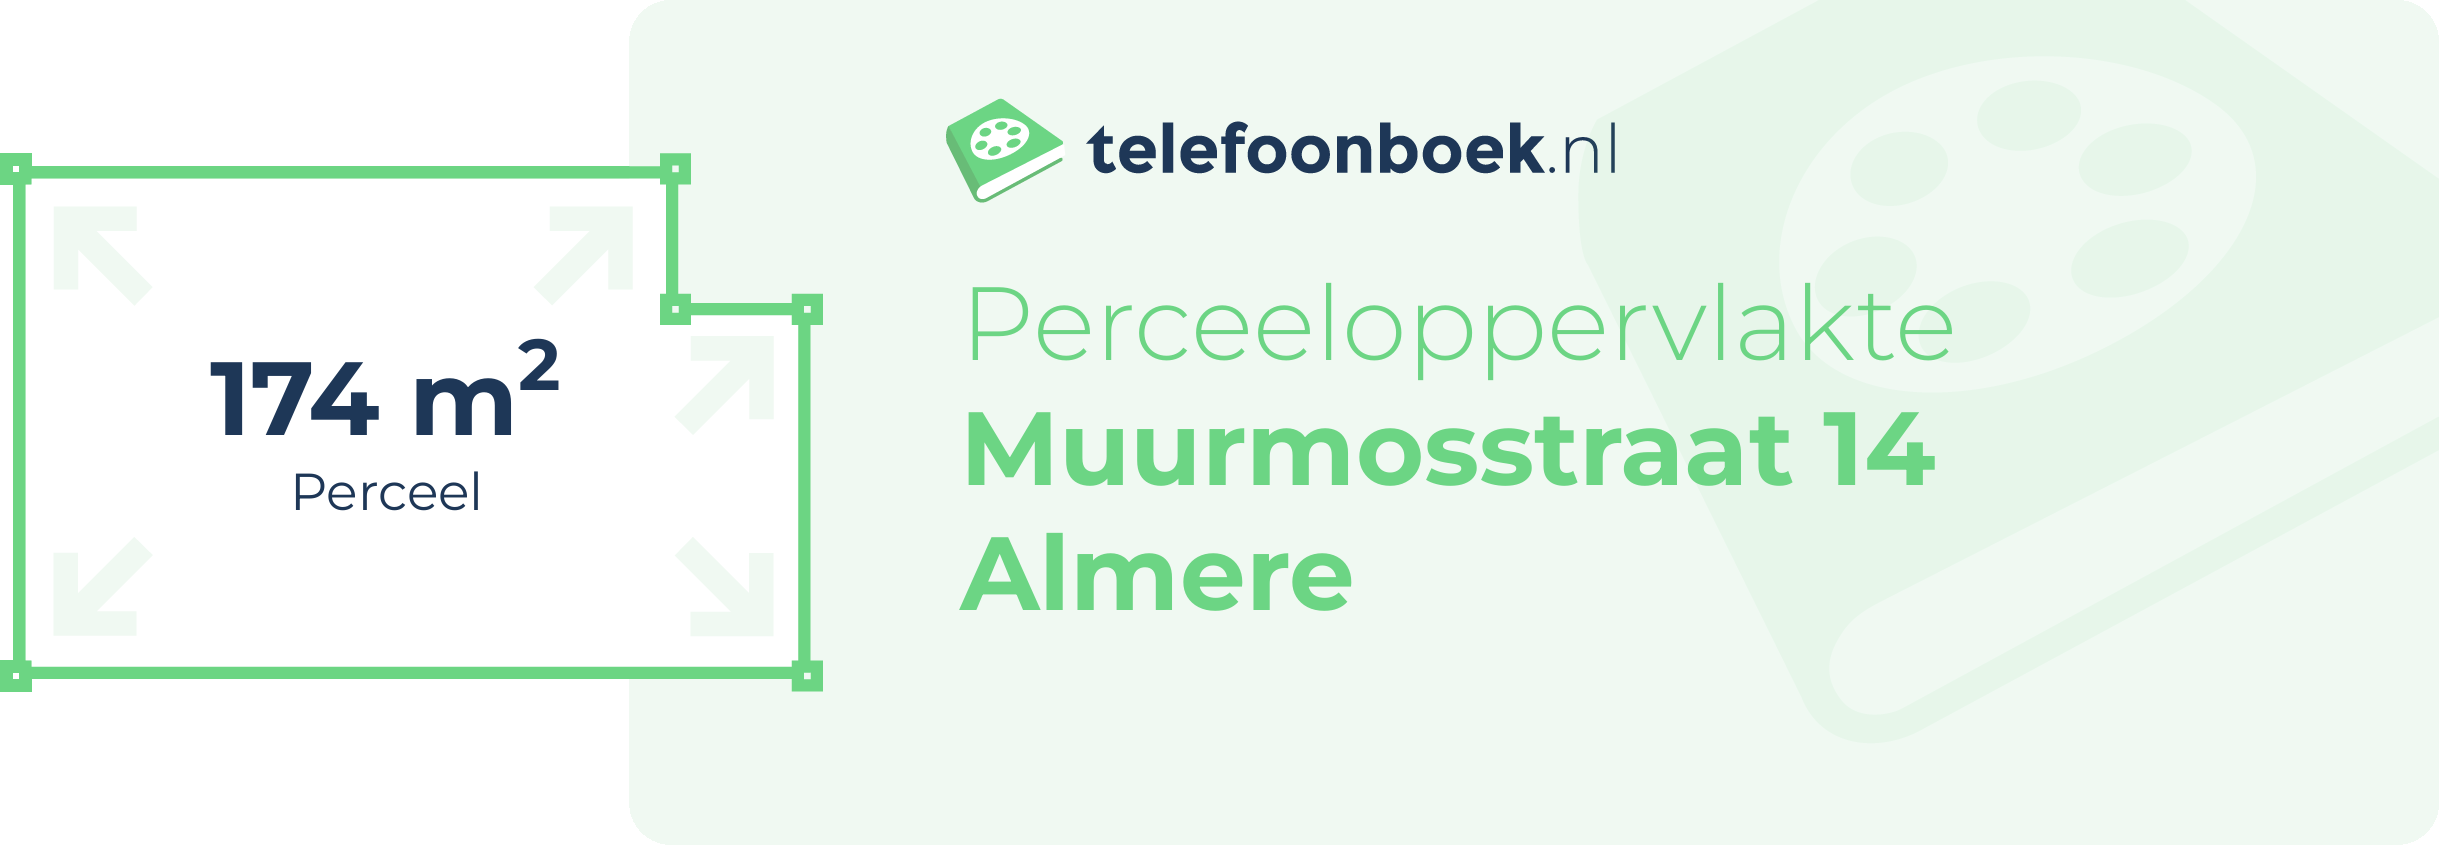 Perceeloppervlakte Muurmosstraat 14 Almere